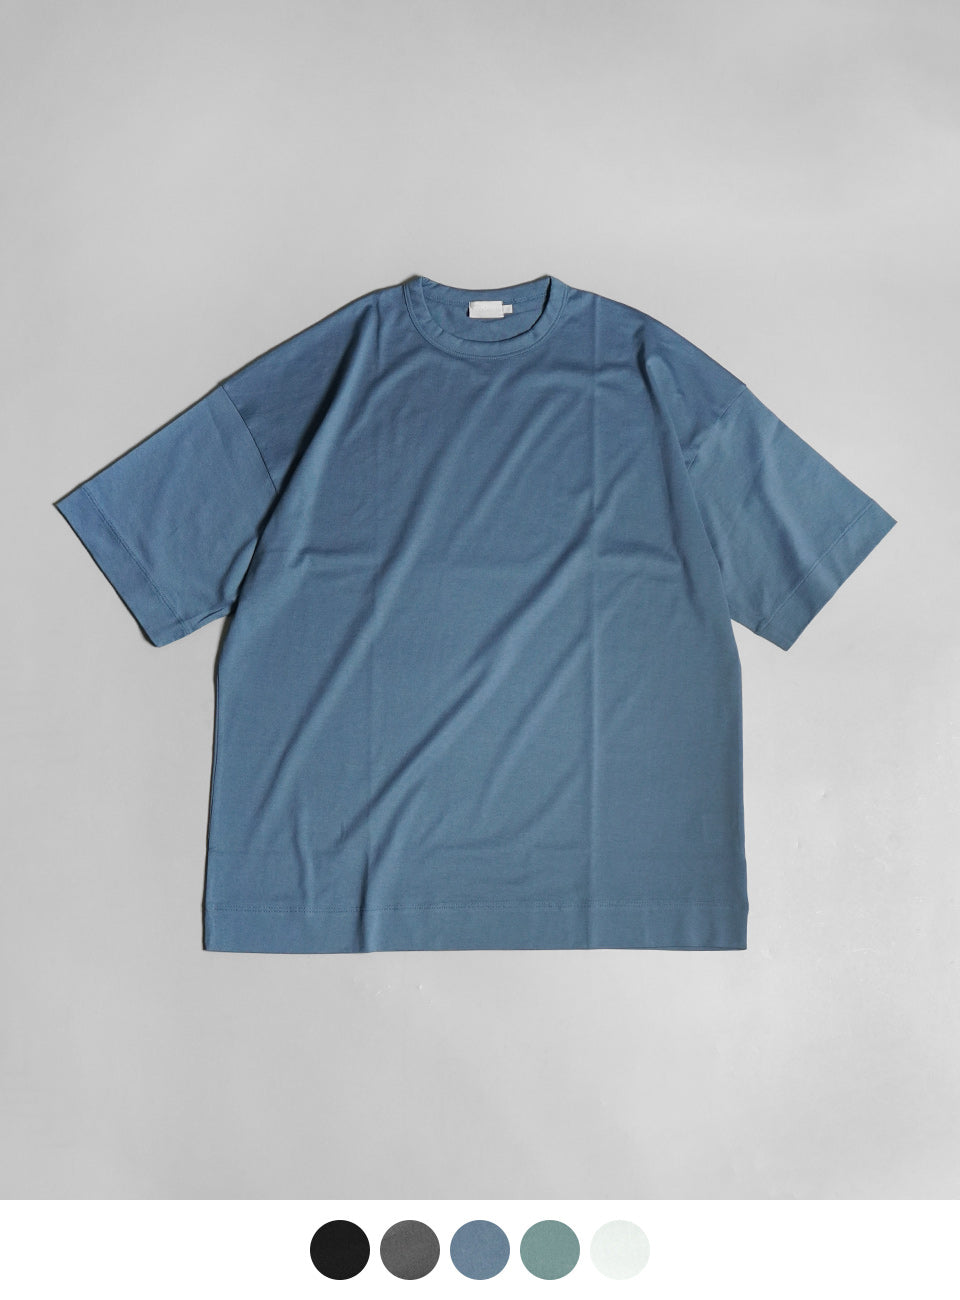 Handvaerk ハンドバーク ショートスリーブ ニュー ビッグ Tシャツ S S NEW BIG T-SHIRT 半袖 カットソー 6536【送料無料】